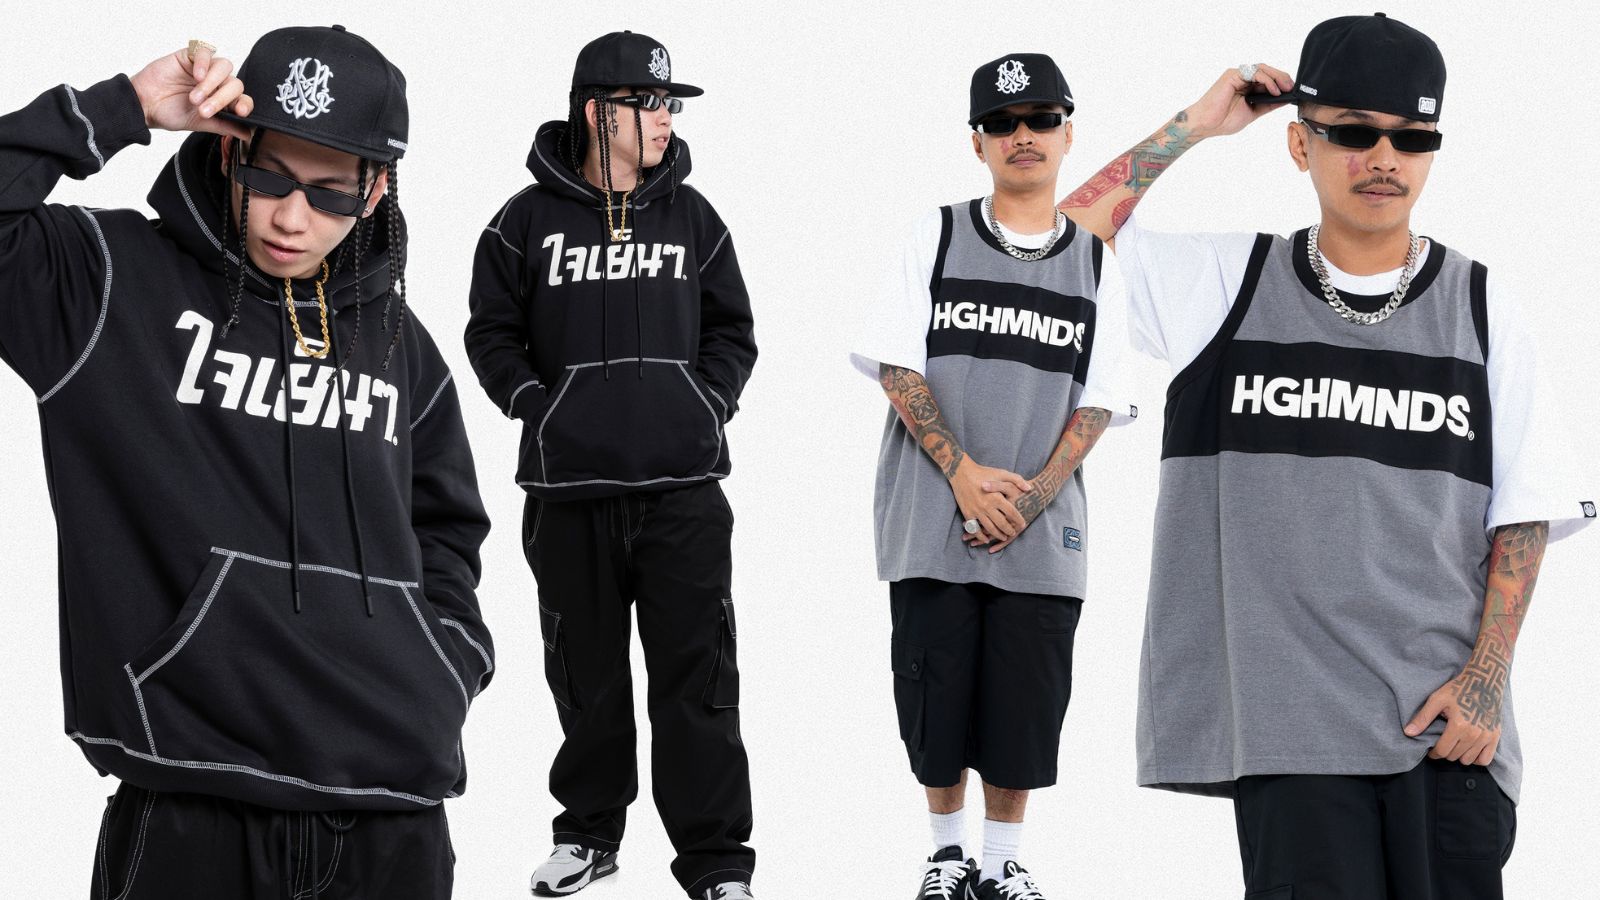 hghmnds clothing omar baliw filipino hip hop streetwear